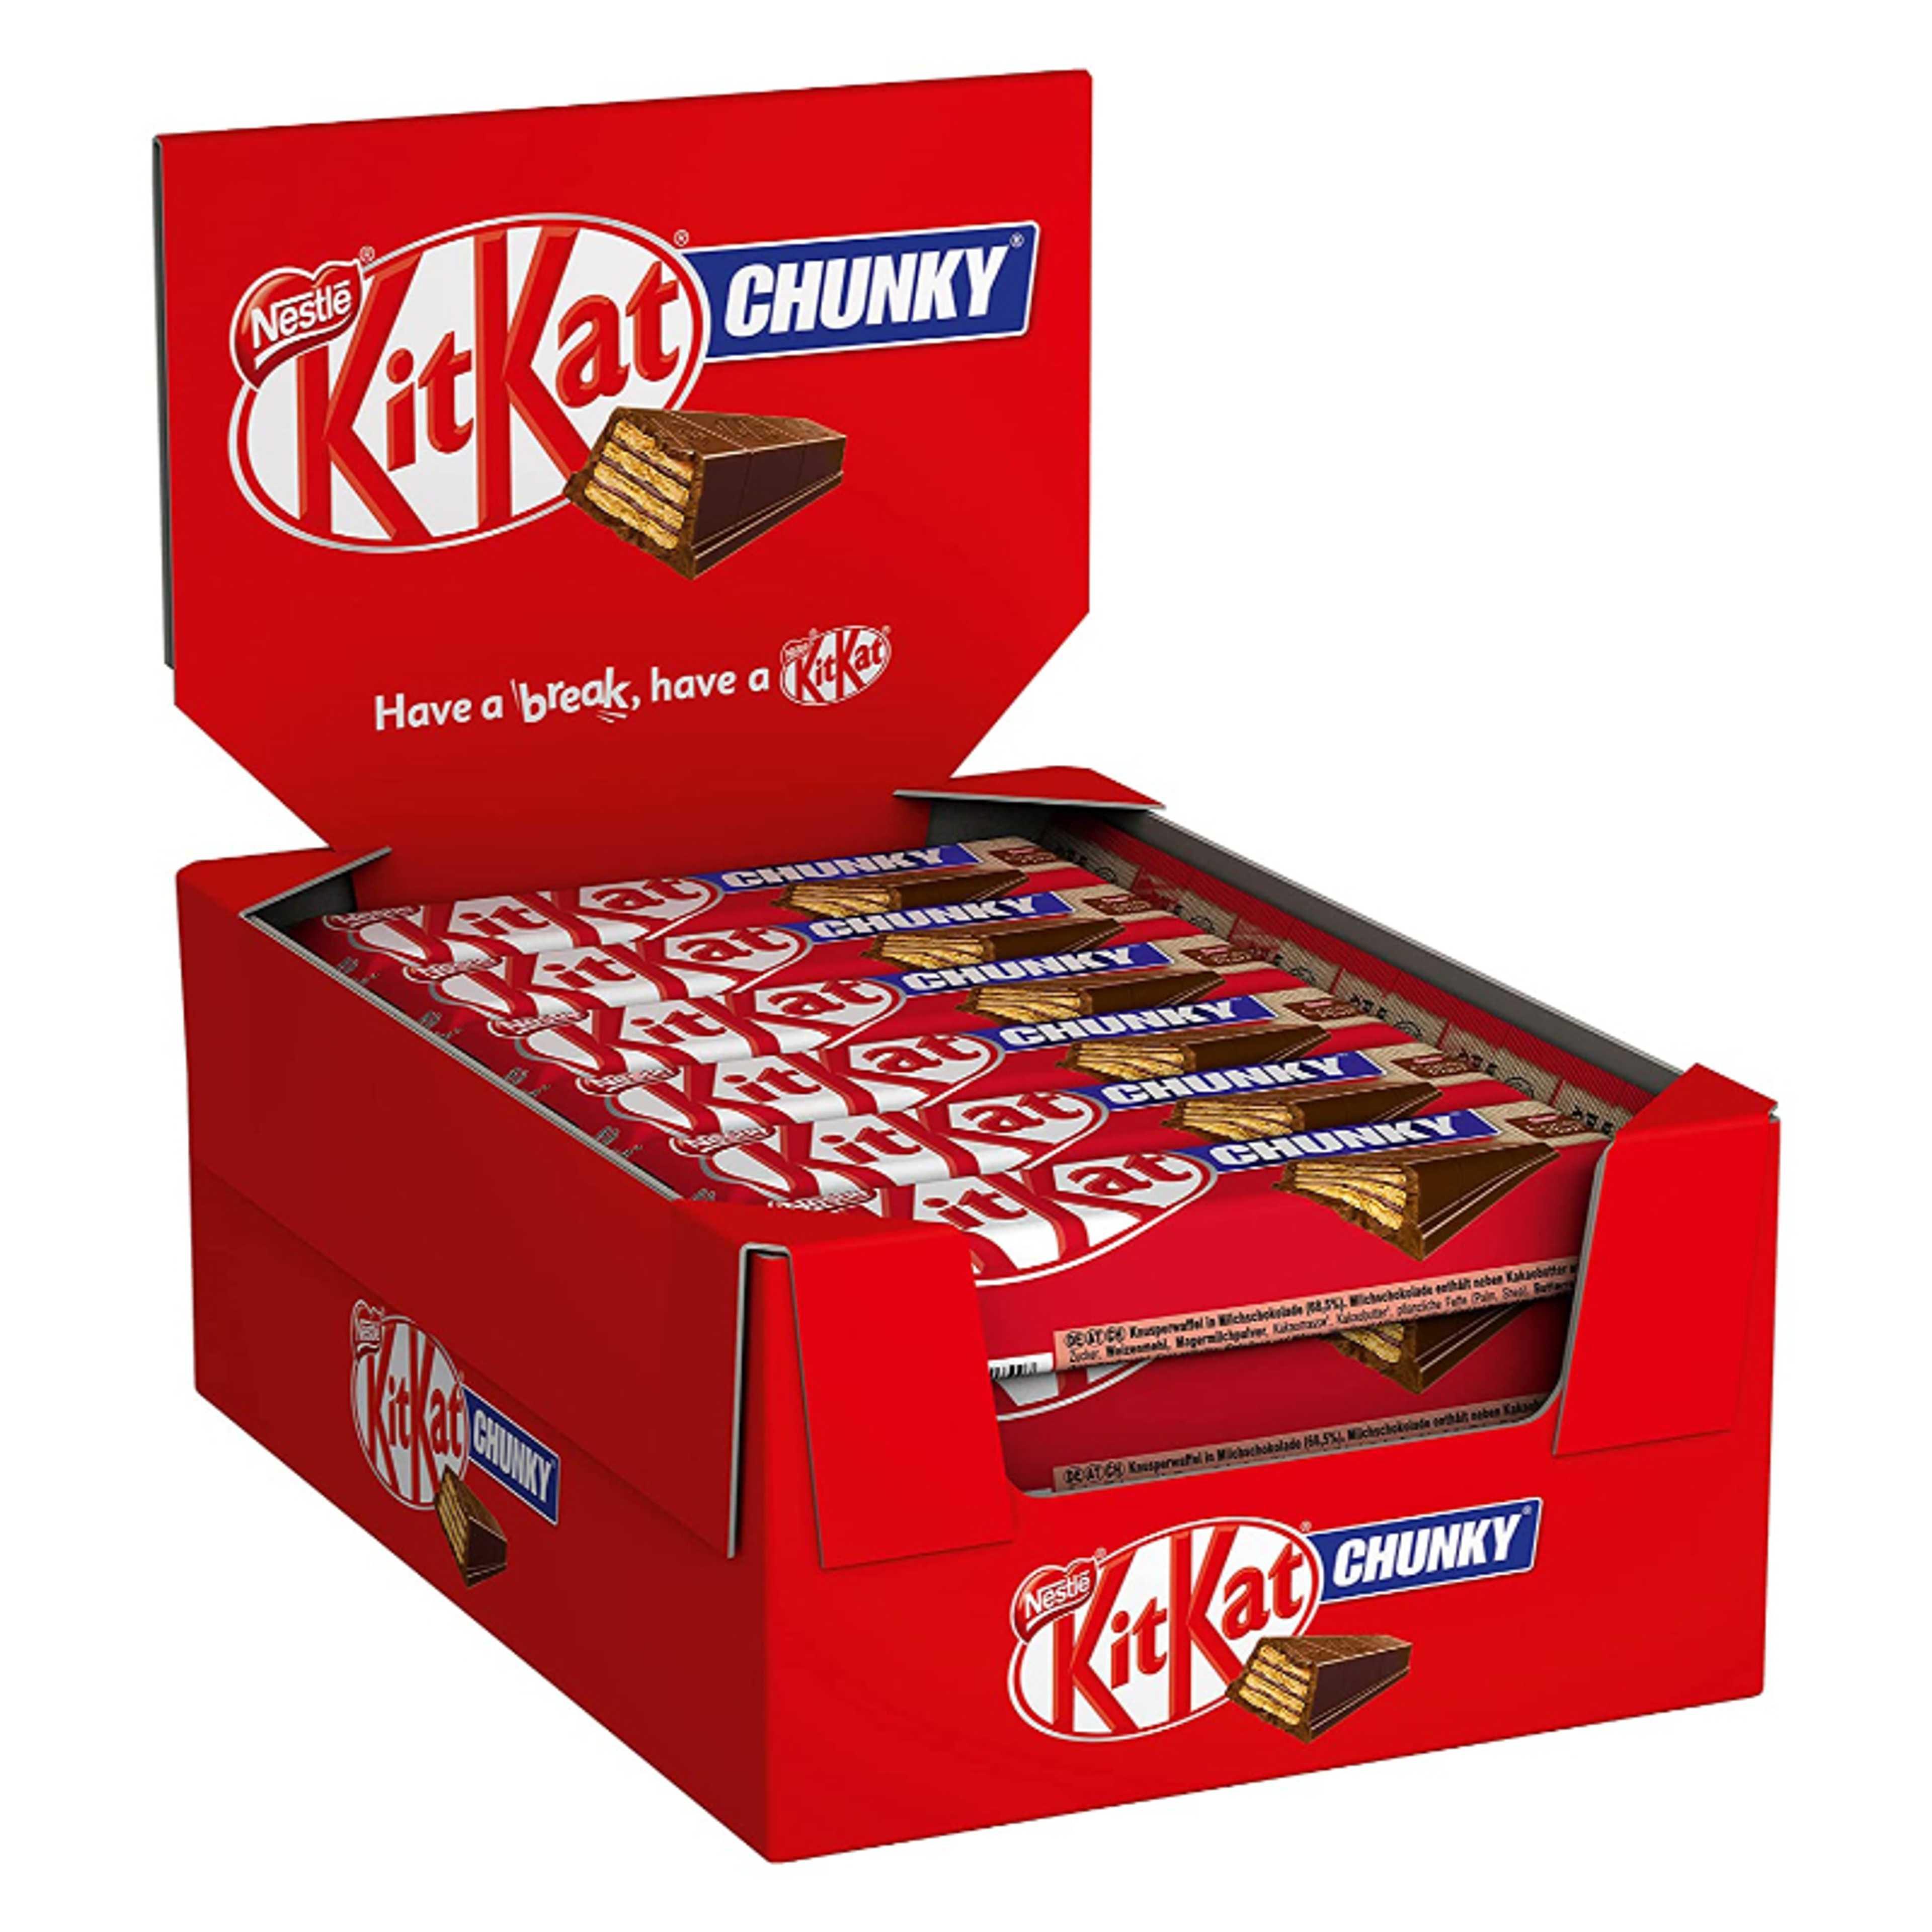 KitKat Chunky Chocolate Bars, 12 Bars Box